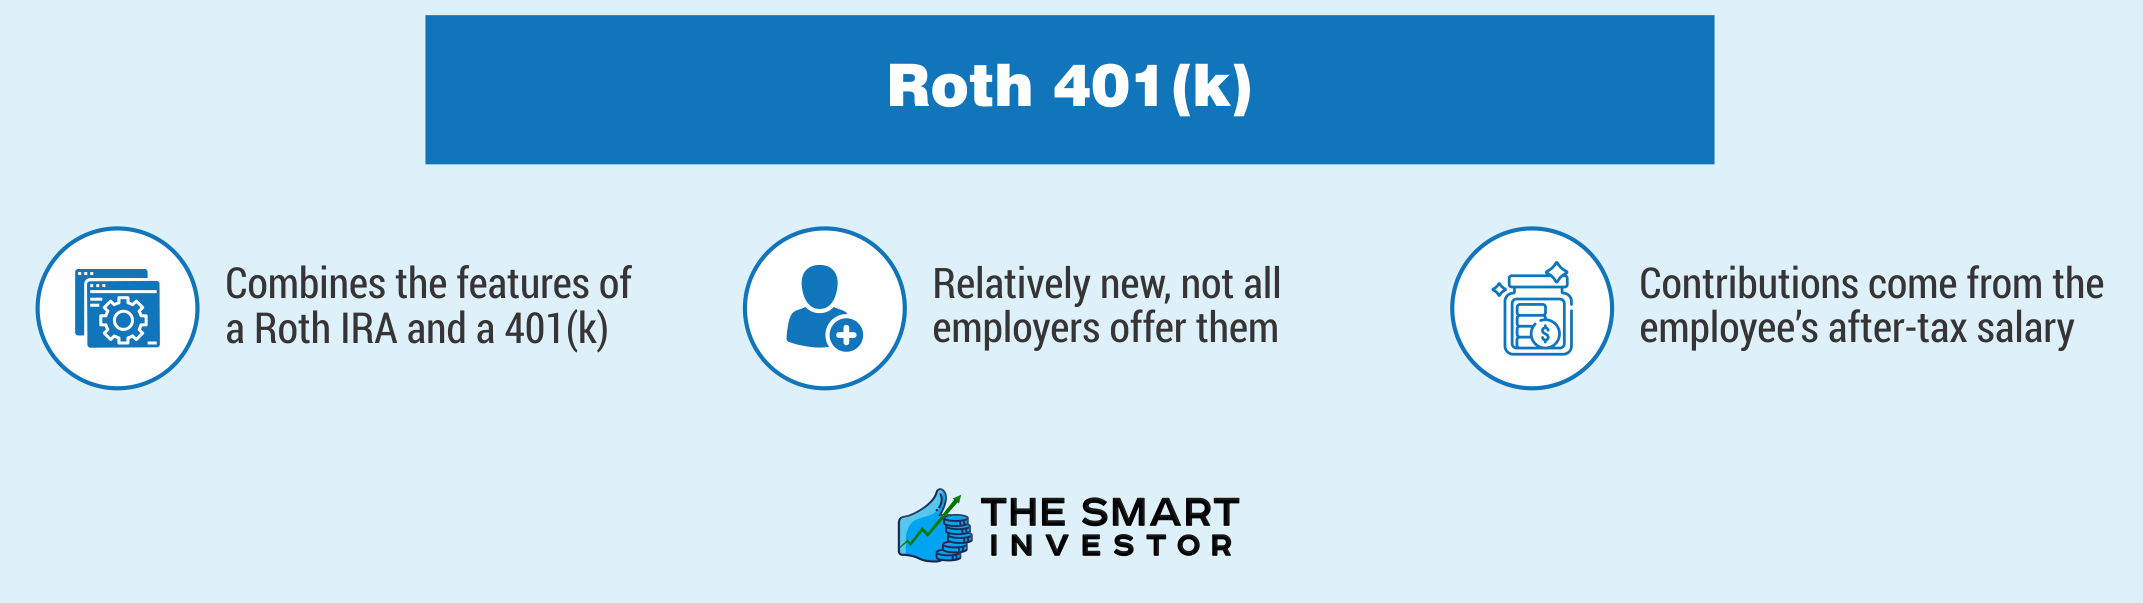 Roth 401(k)